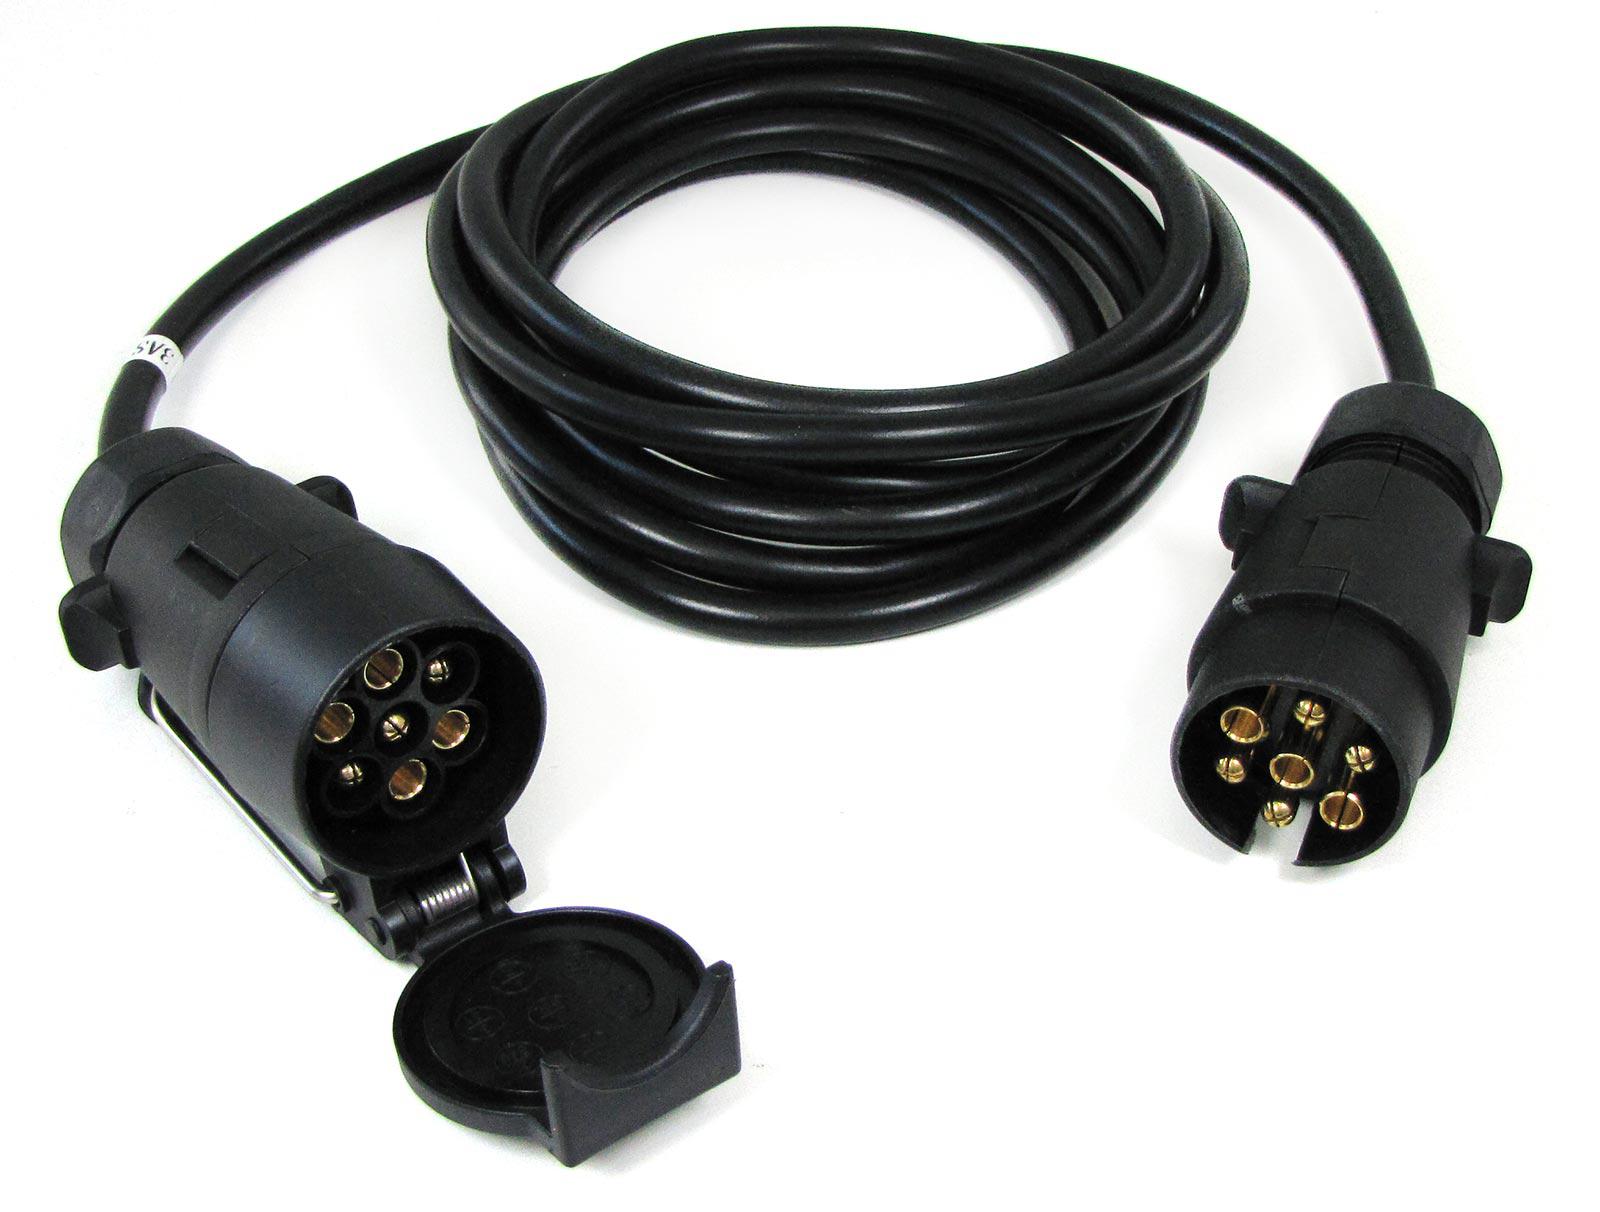 12v 7 Pin Trailer Cable Plug to Socket 5m - spo-cs-disabled - spo-default - spo-disabled - spo-notify-me-disabled - tow